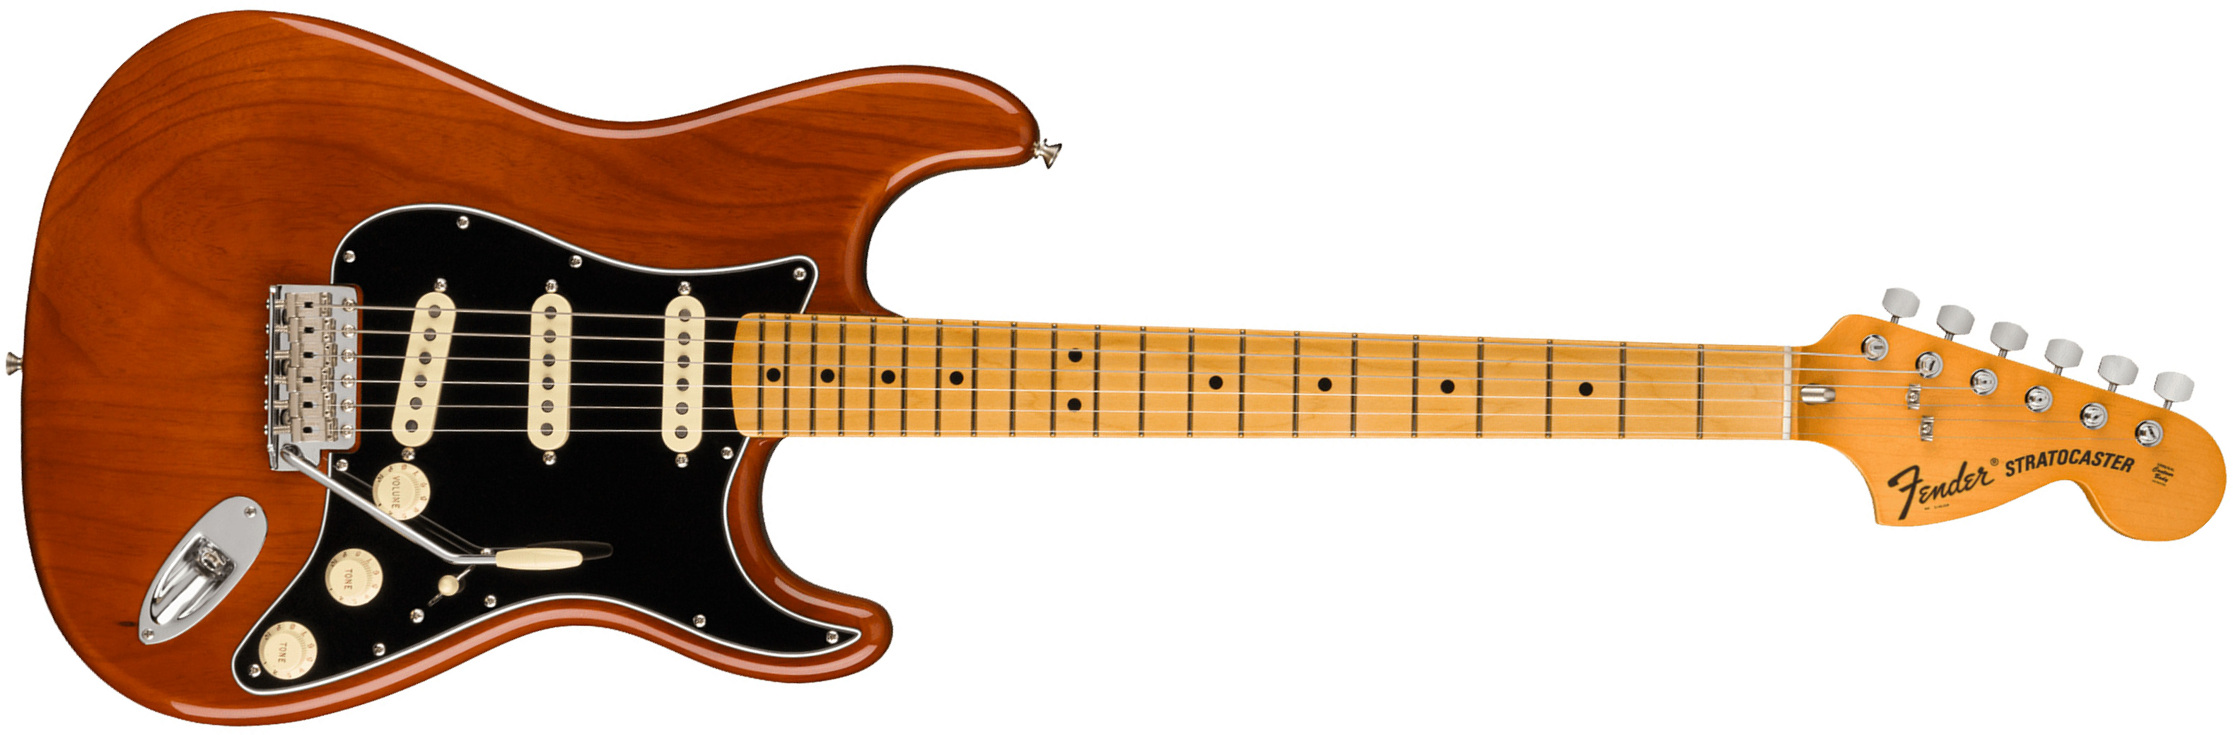 Fender Strat 1973 American Vintage Ii Usa 3s Trem Mn - Mocha - Guitare Électrique Forme Str - Main picture